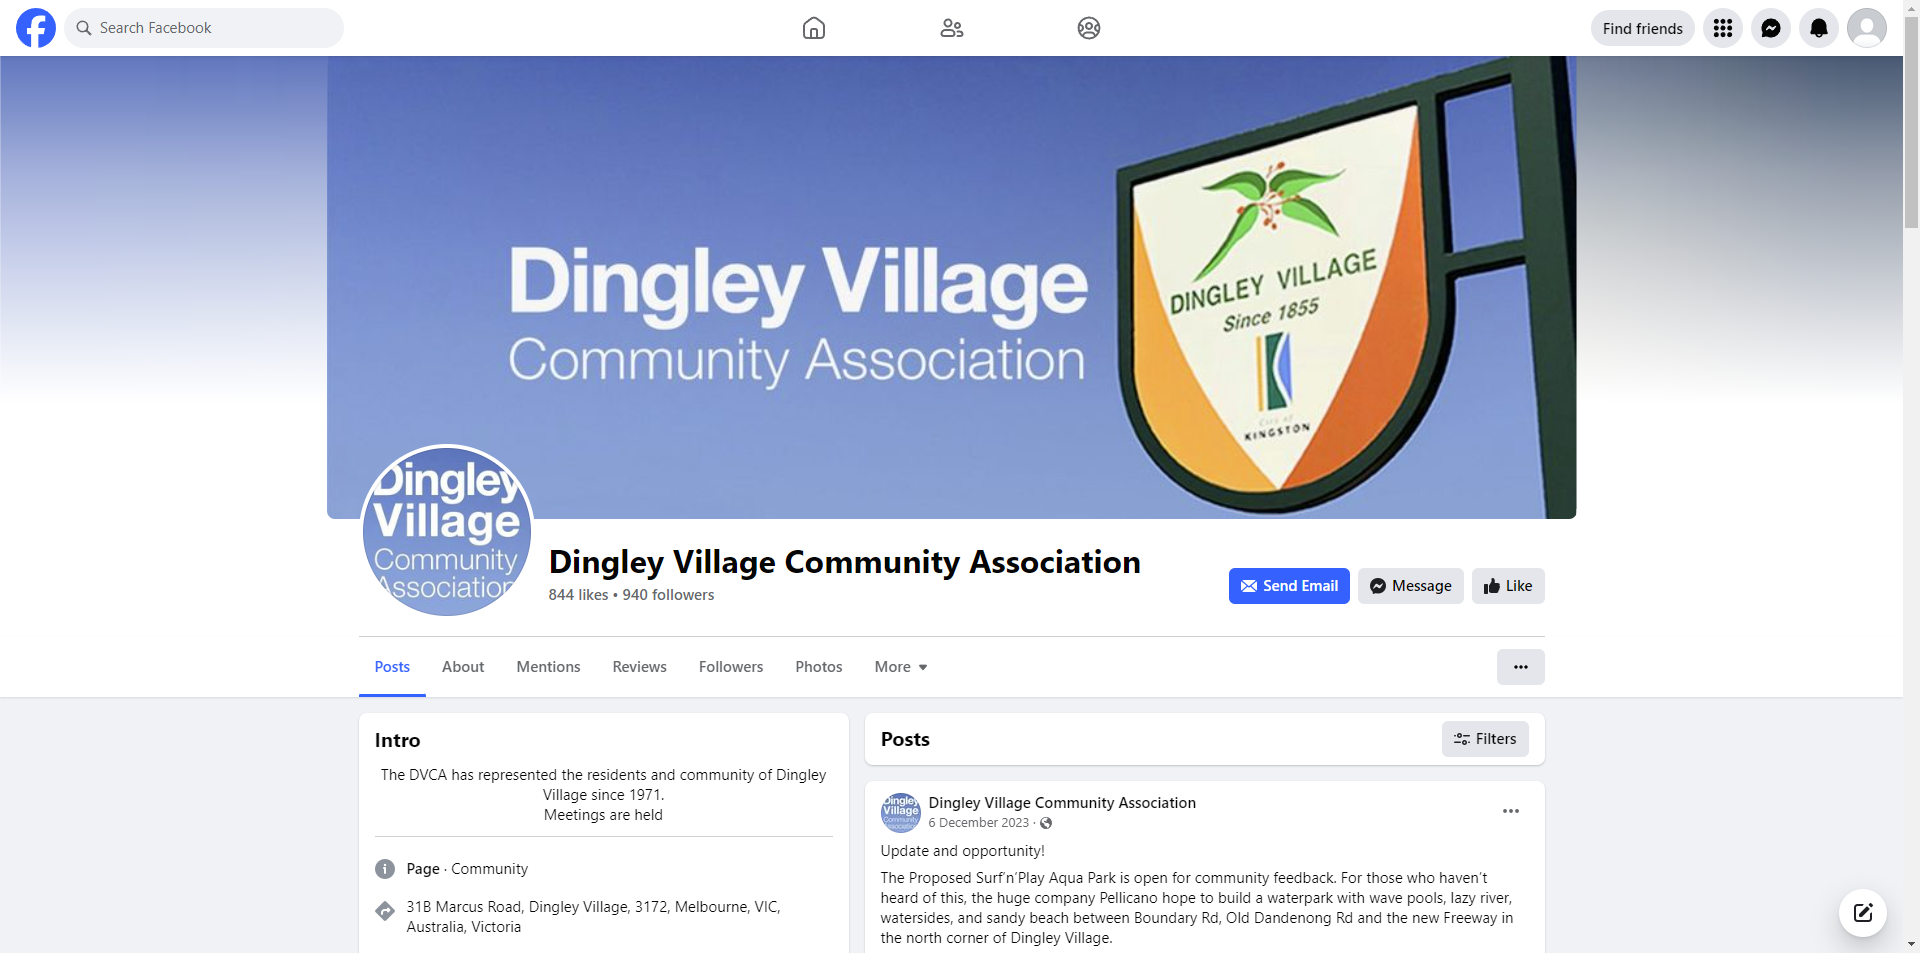 Dingley Village Community Association